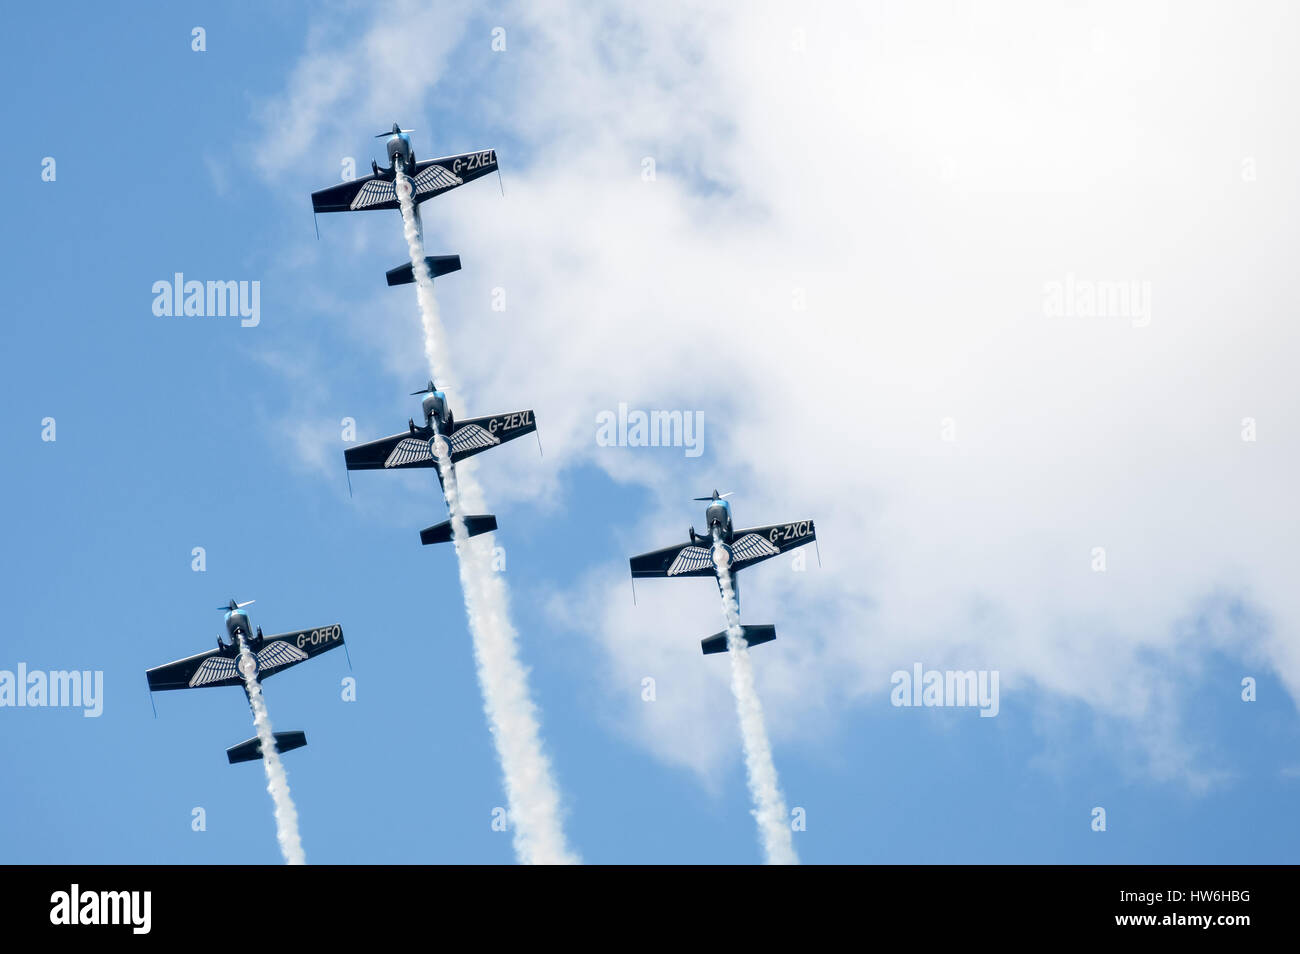 The Blades aerobatics team performing a tight formation maneuver at the Farnborough Airshow, UK Stock Photo